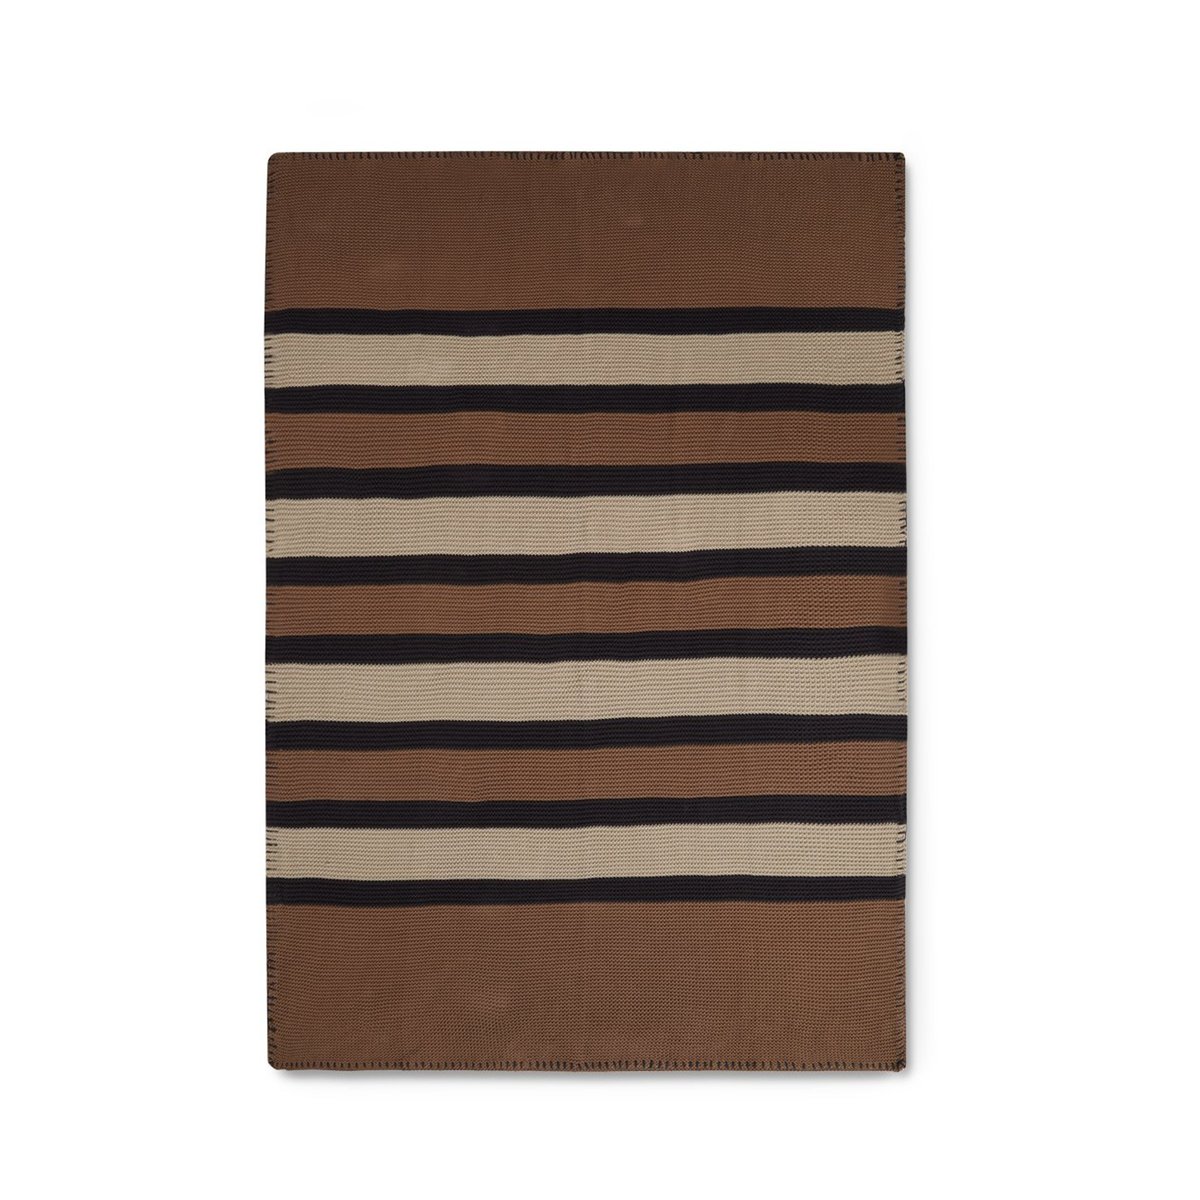 Lexington Striped Knitted Cotton plaid 130×170 cm Brown/Beige/Dark gray